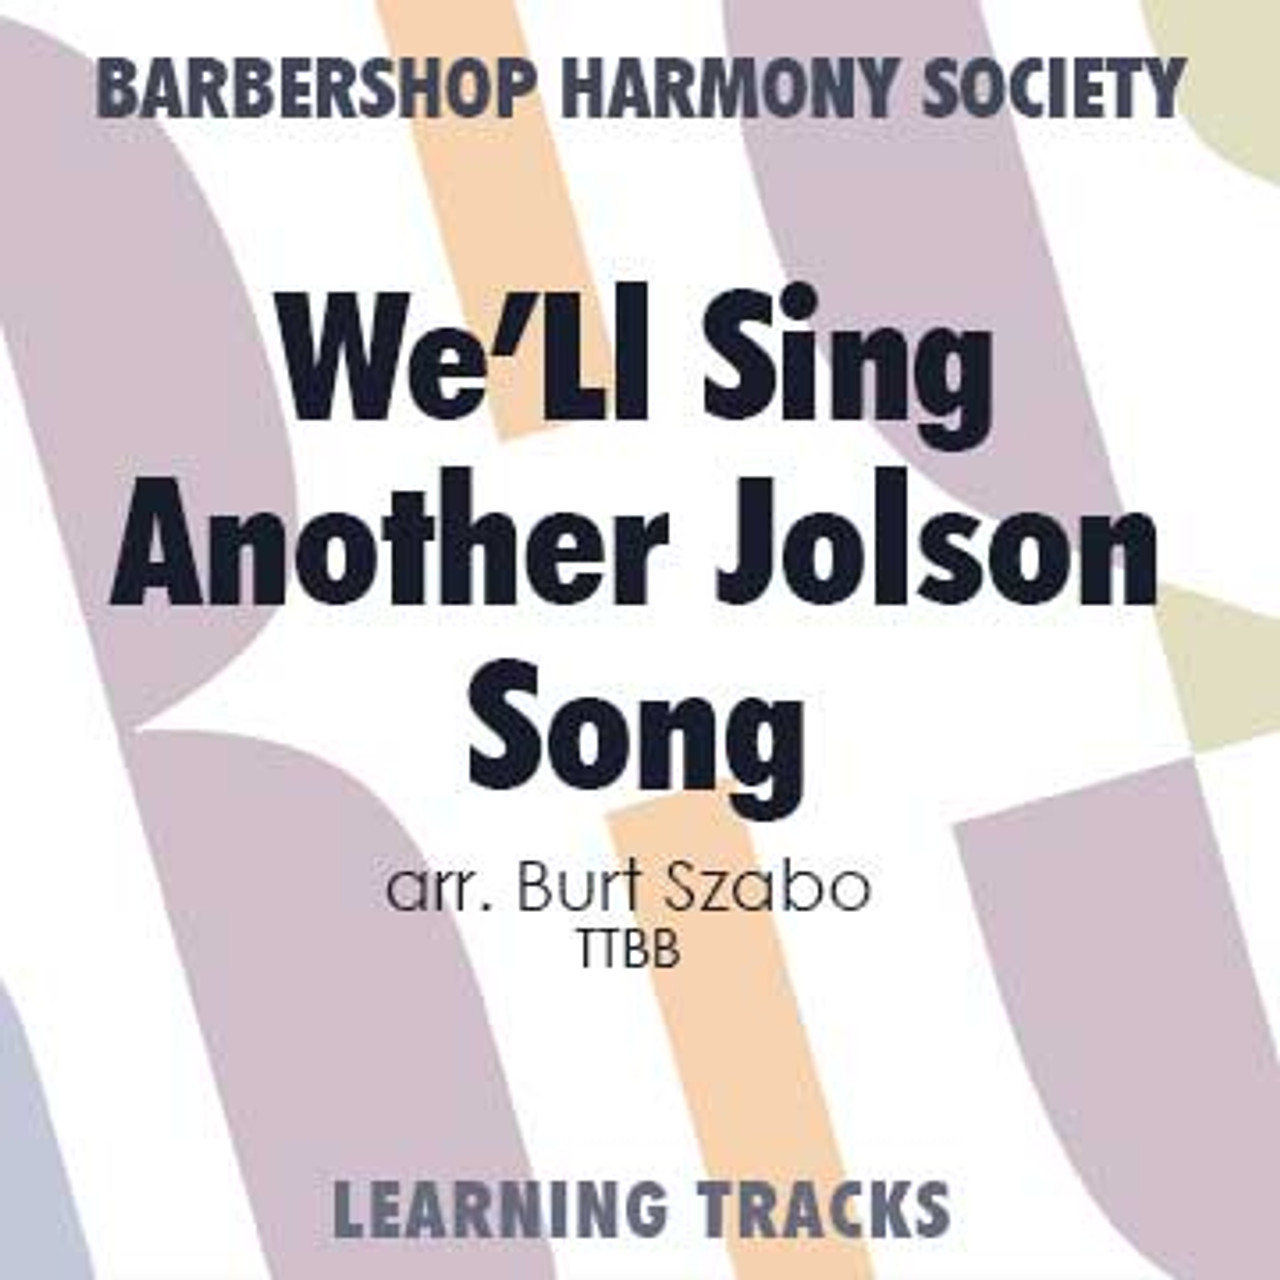 We'll Sing Another Jolson Song (TTBB) (Szabo) - Digital Learning Tracks for 7547